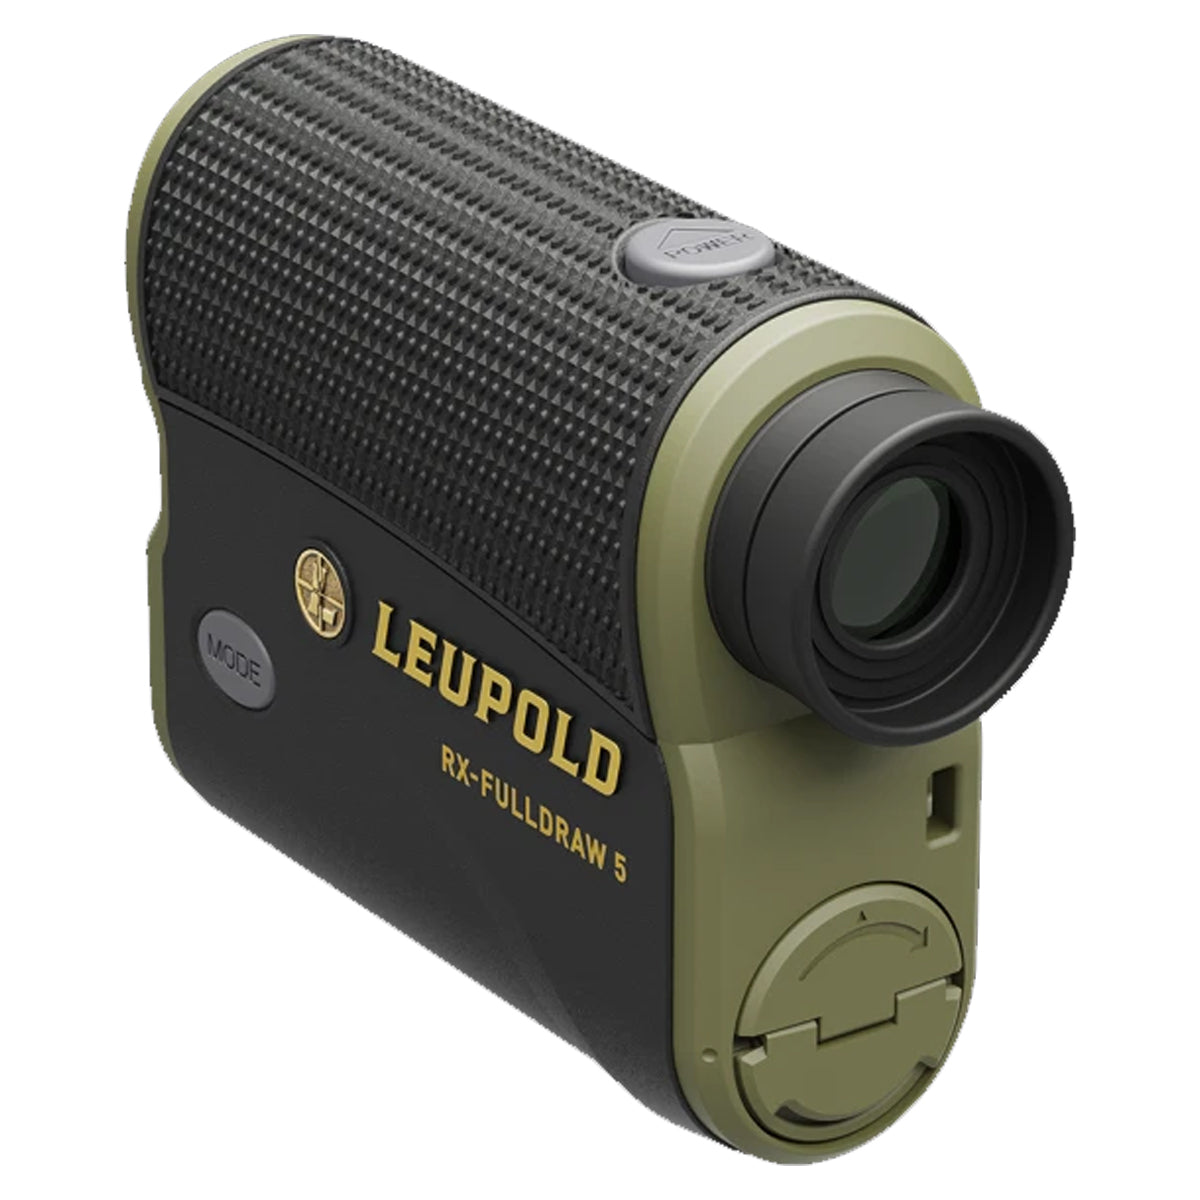 Leupold RX-Fulldraw 5 Rangefinder